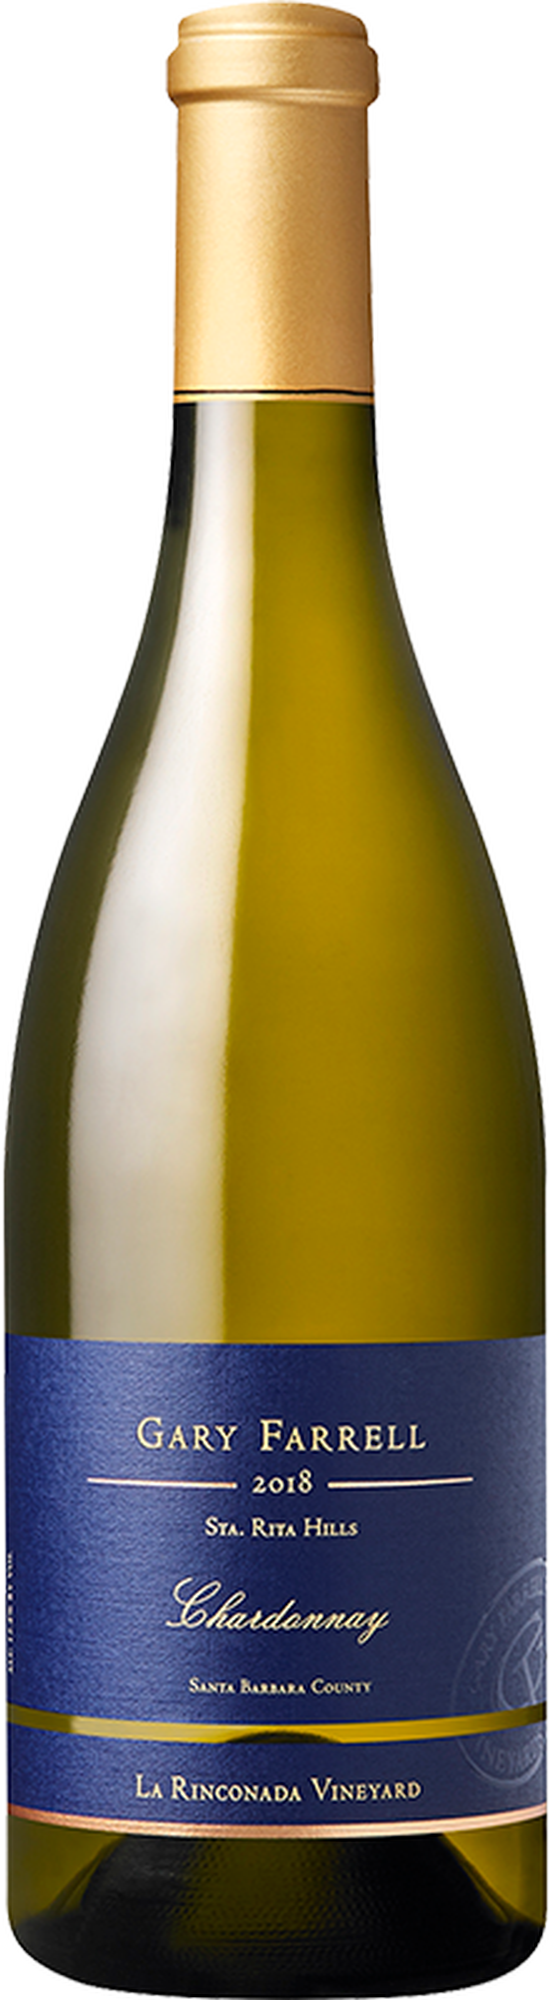 2018 La Rinconada Vineyard Chardonnay